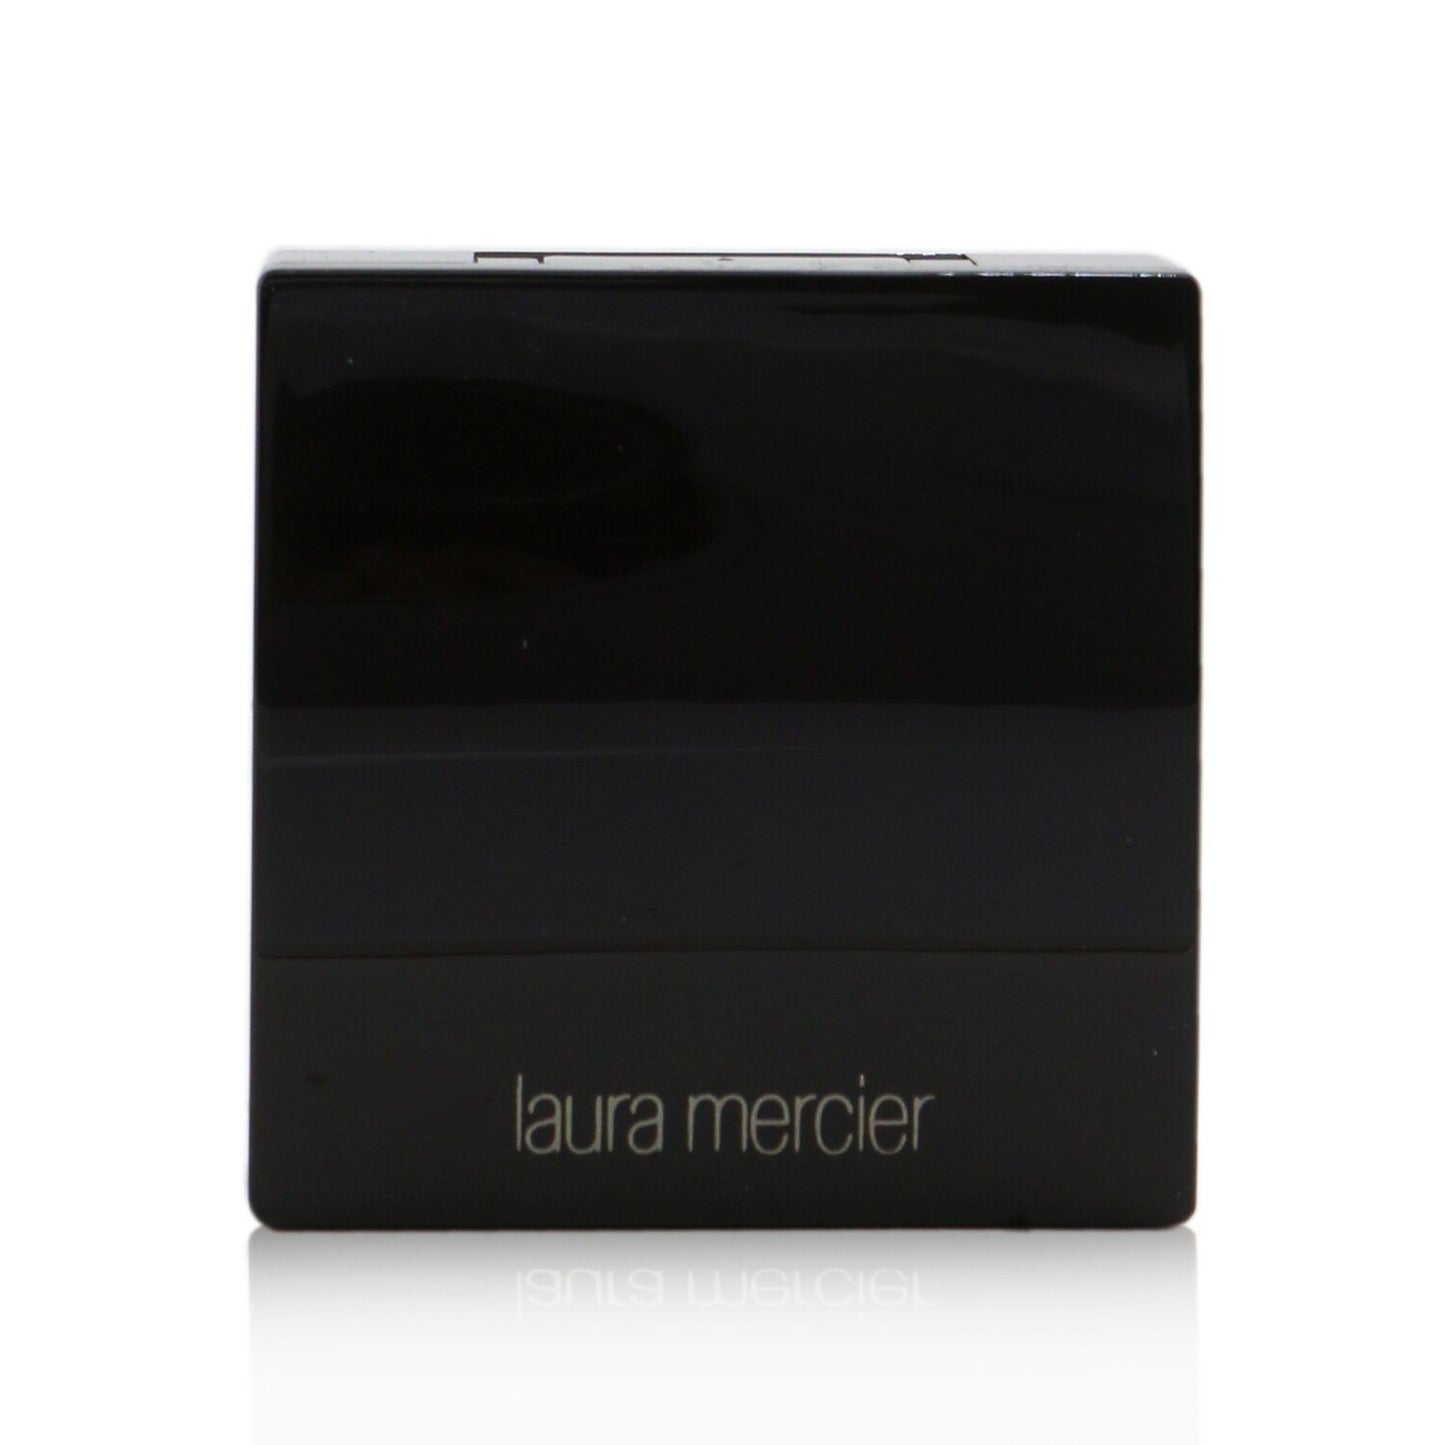 LAURA MERCIER - Pressed Setting Powder - Translucent 9g/0.3oz